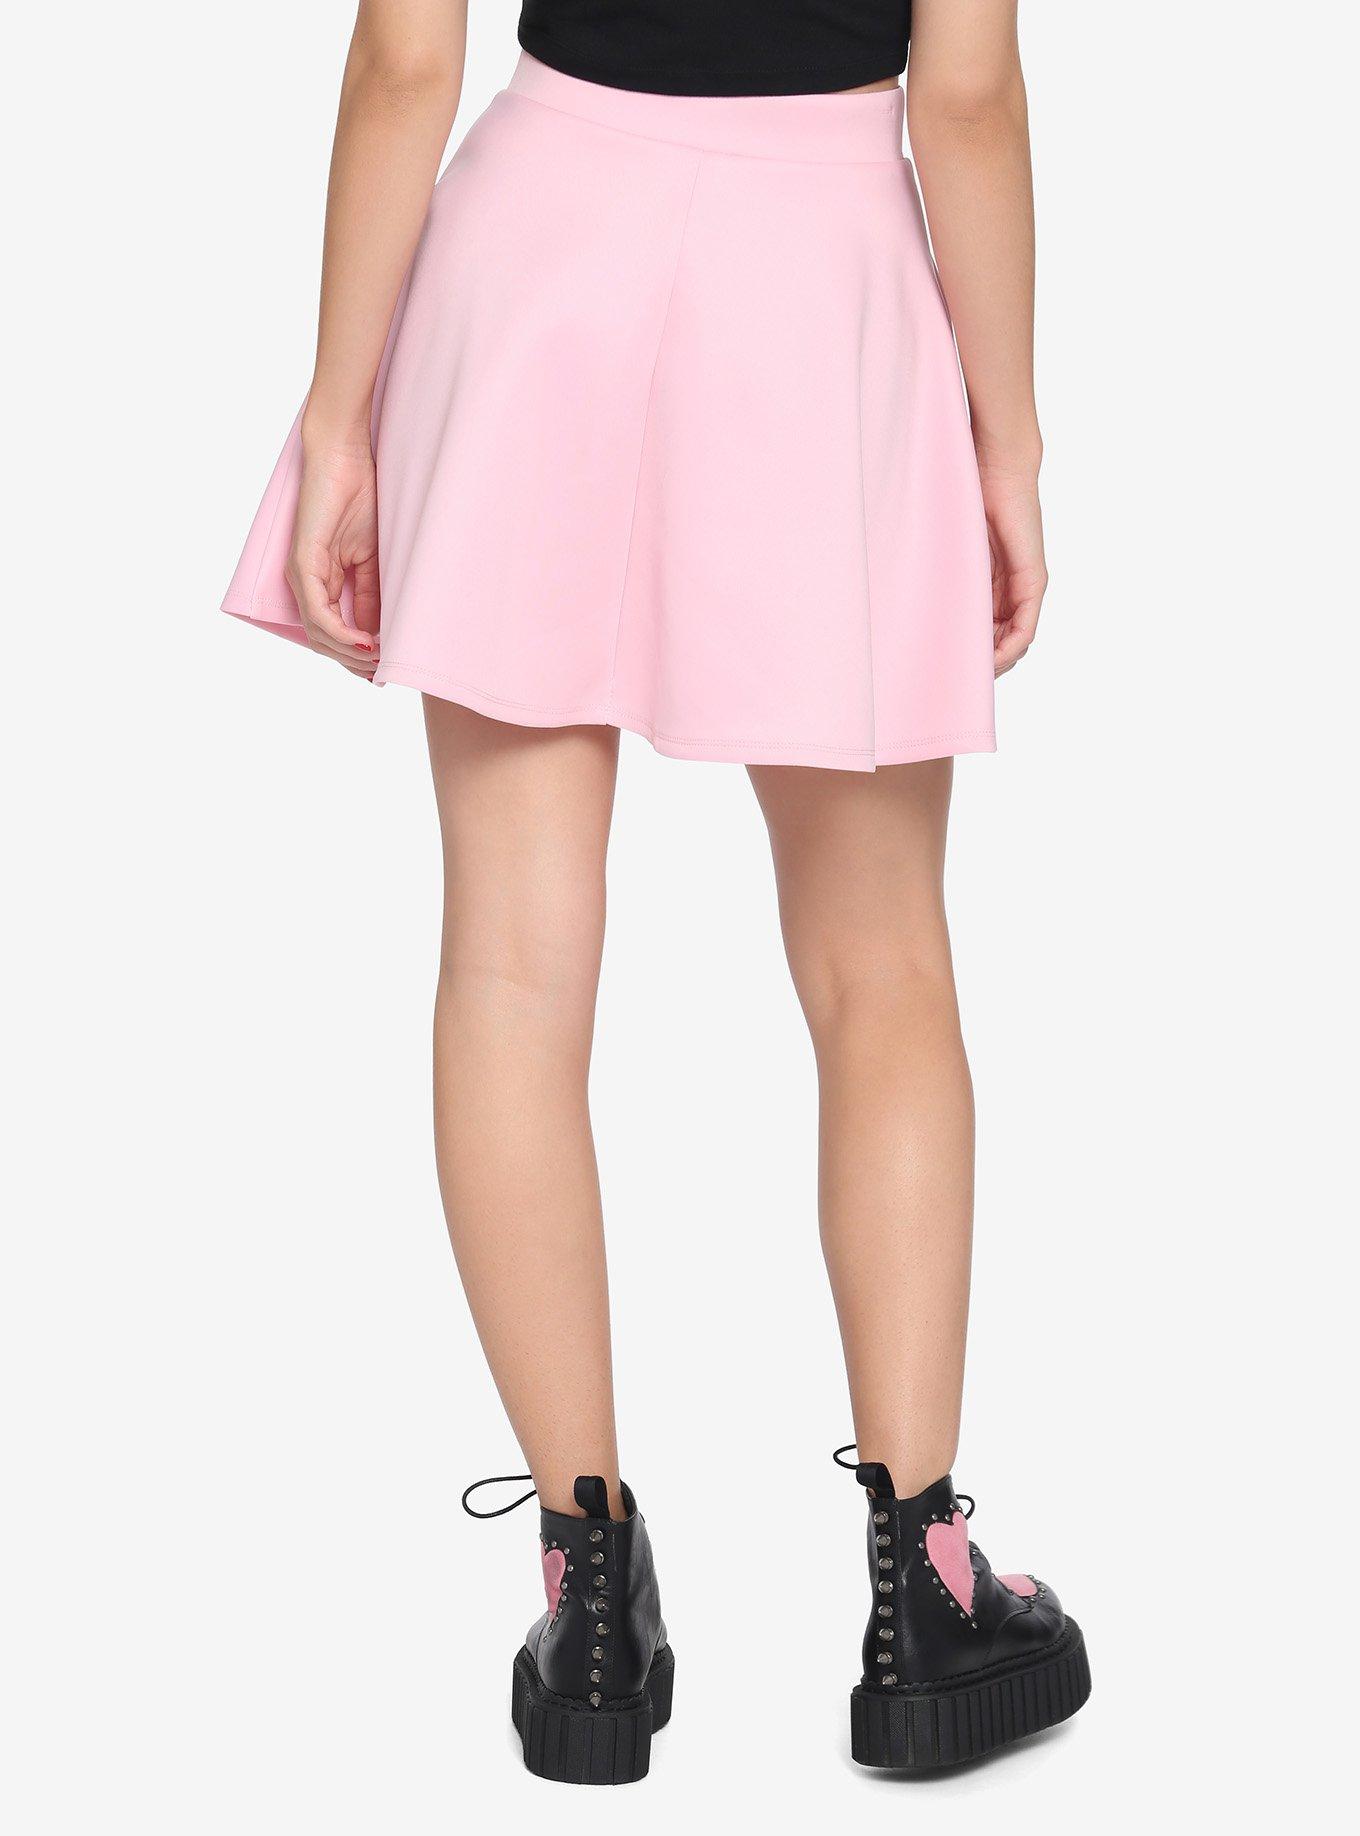 Pastel Pink Lace-Up Skirt, PINK, alternate